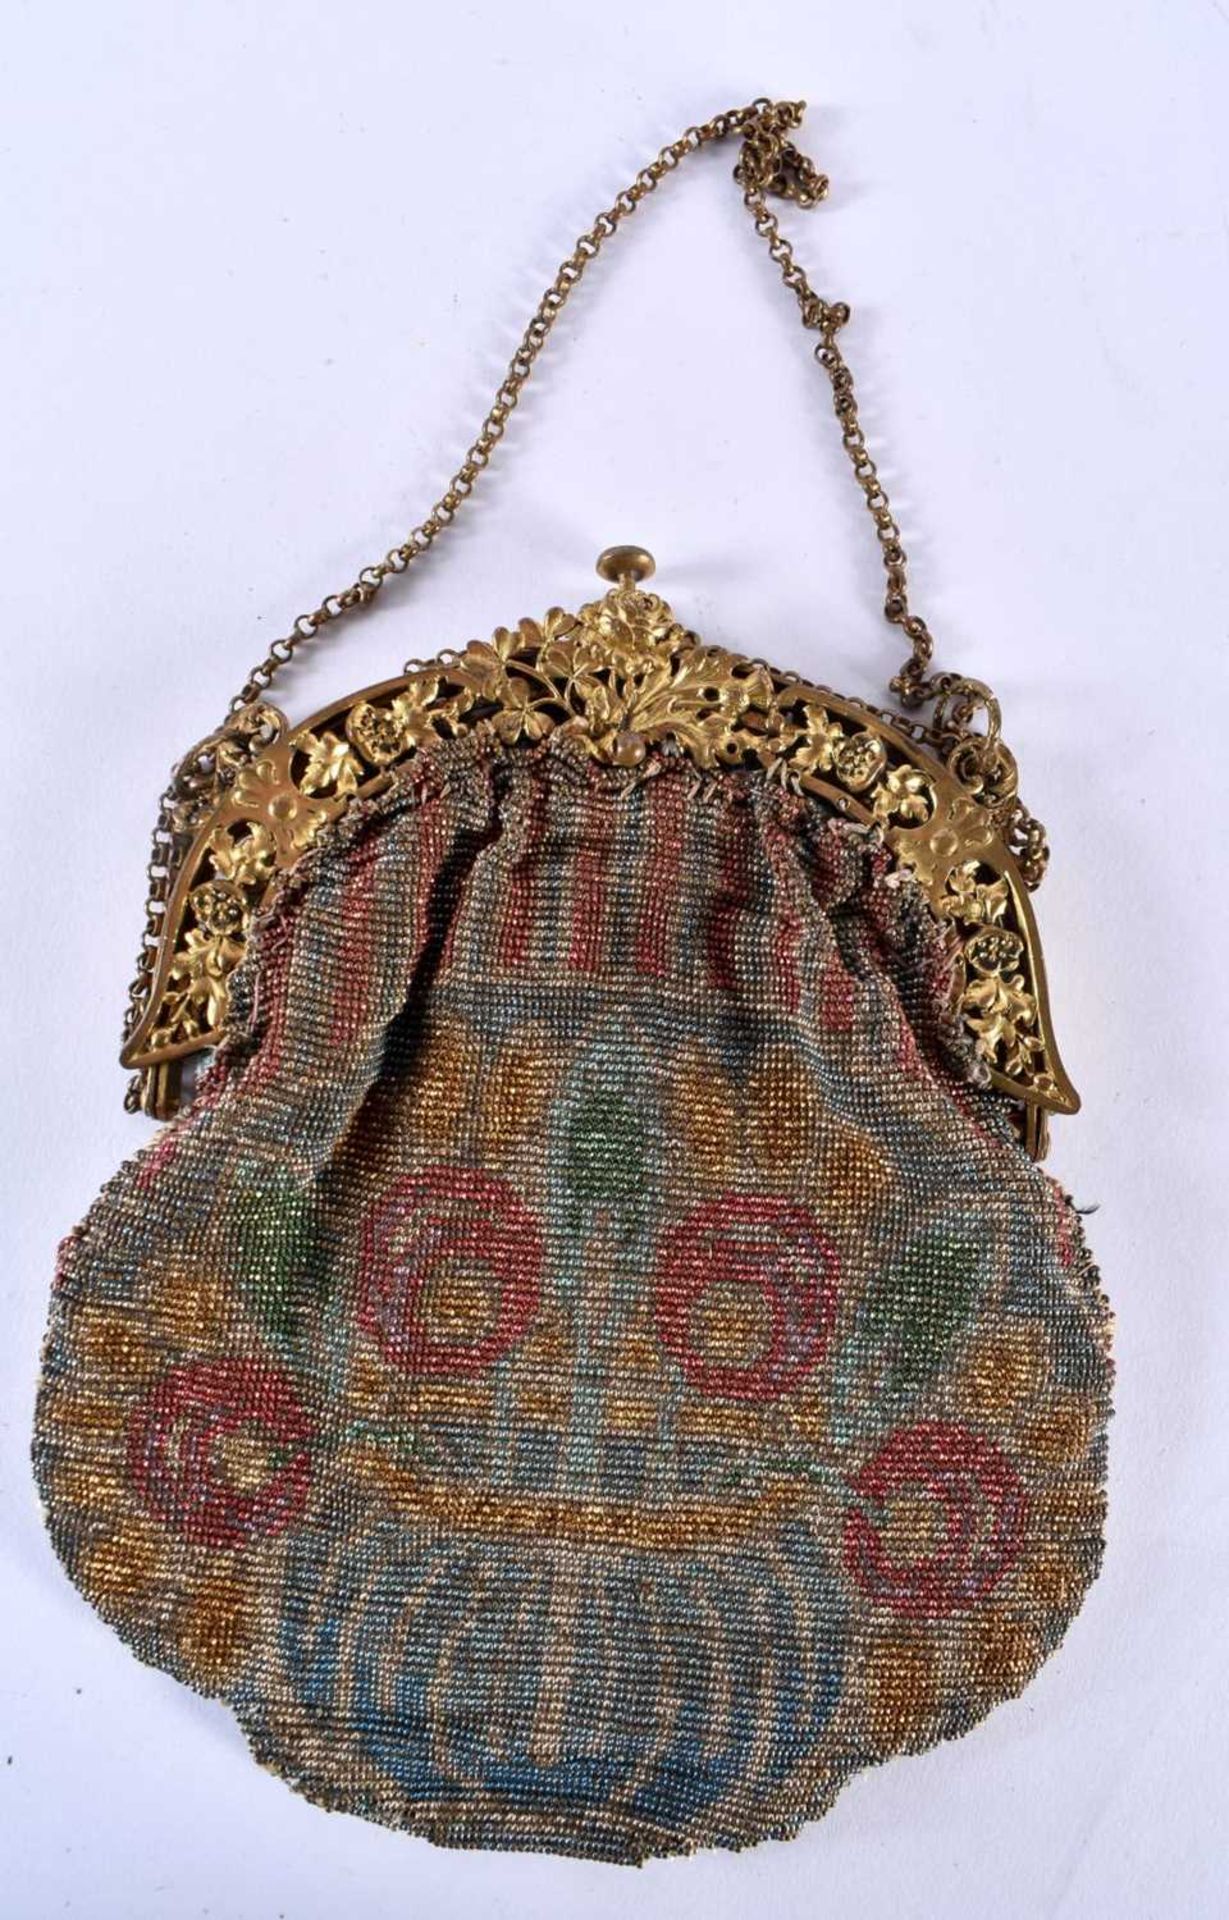 A Beadwork Bag with Gilt Mounts. 19cm x 15cm, weight 285g